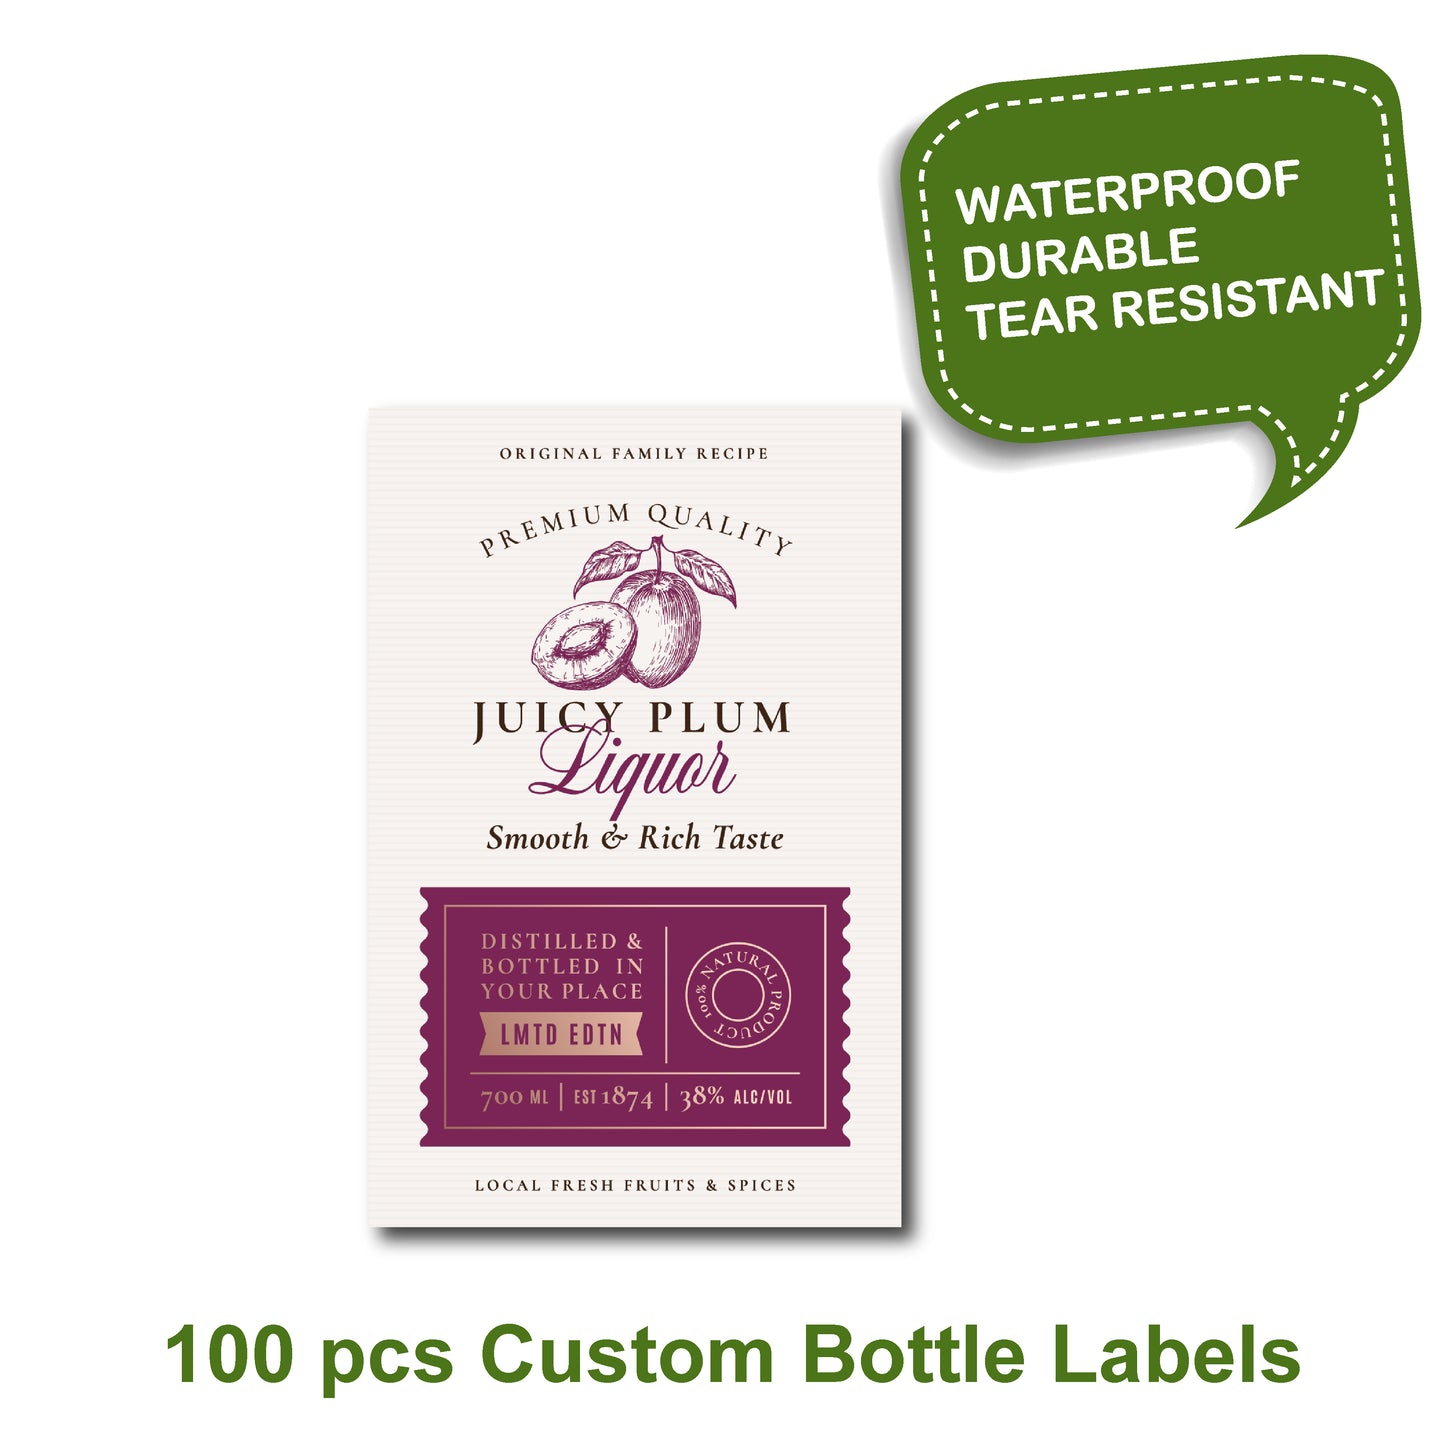 Juicy plum product label, 100 pcs Custom bottle labels, custom maple syrup label, custom label, custom candle label, custom product label, labelsCustom stickers, stickers,